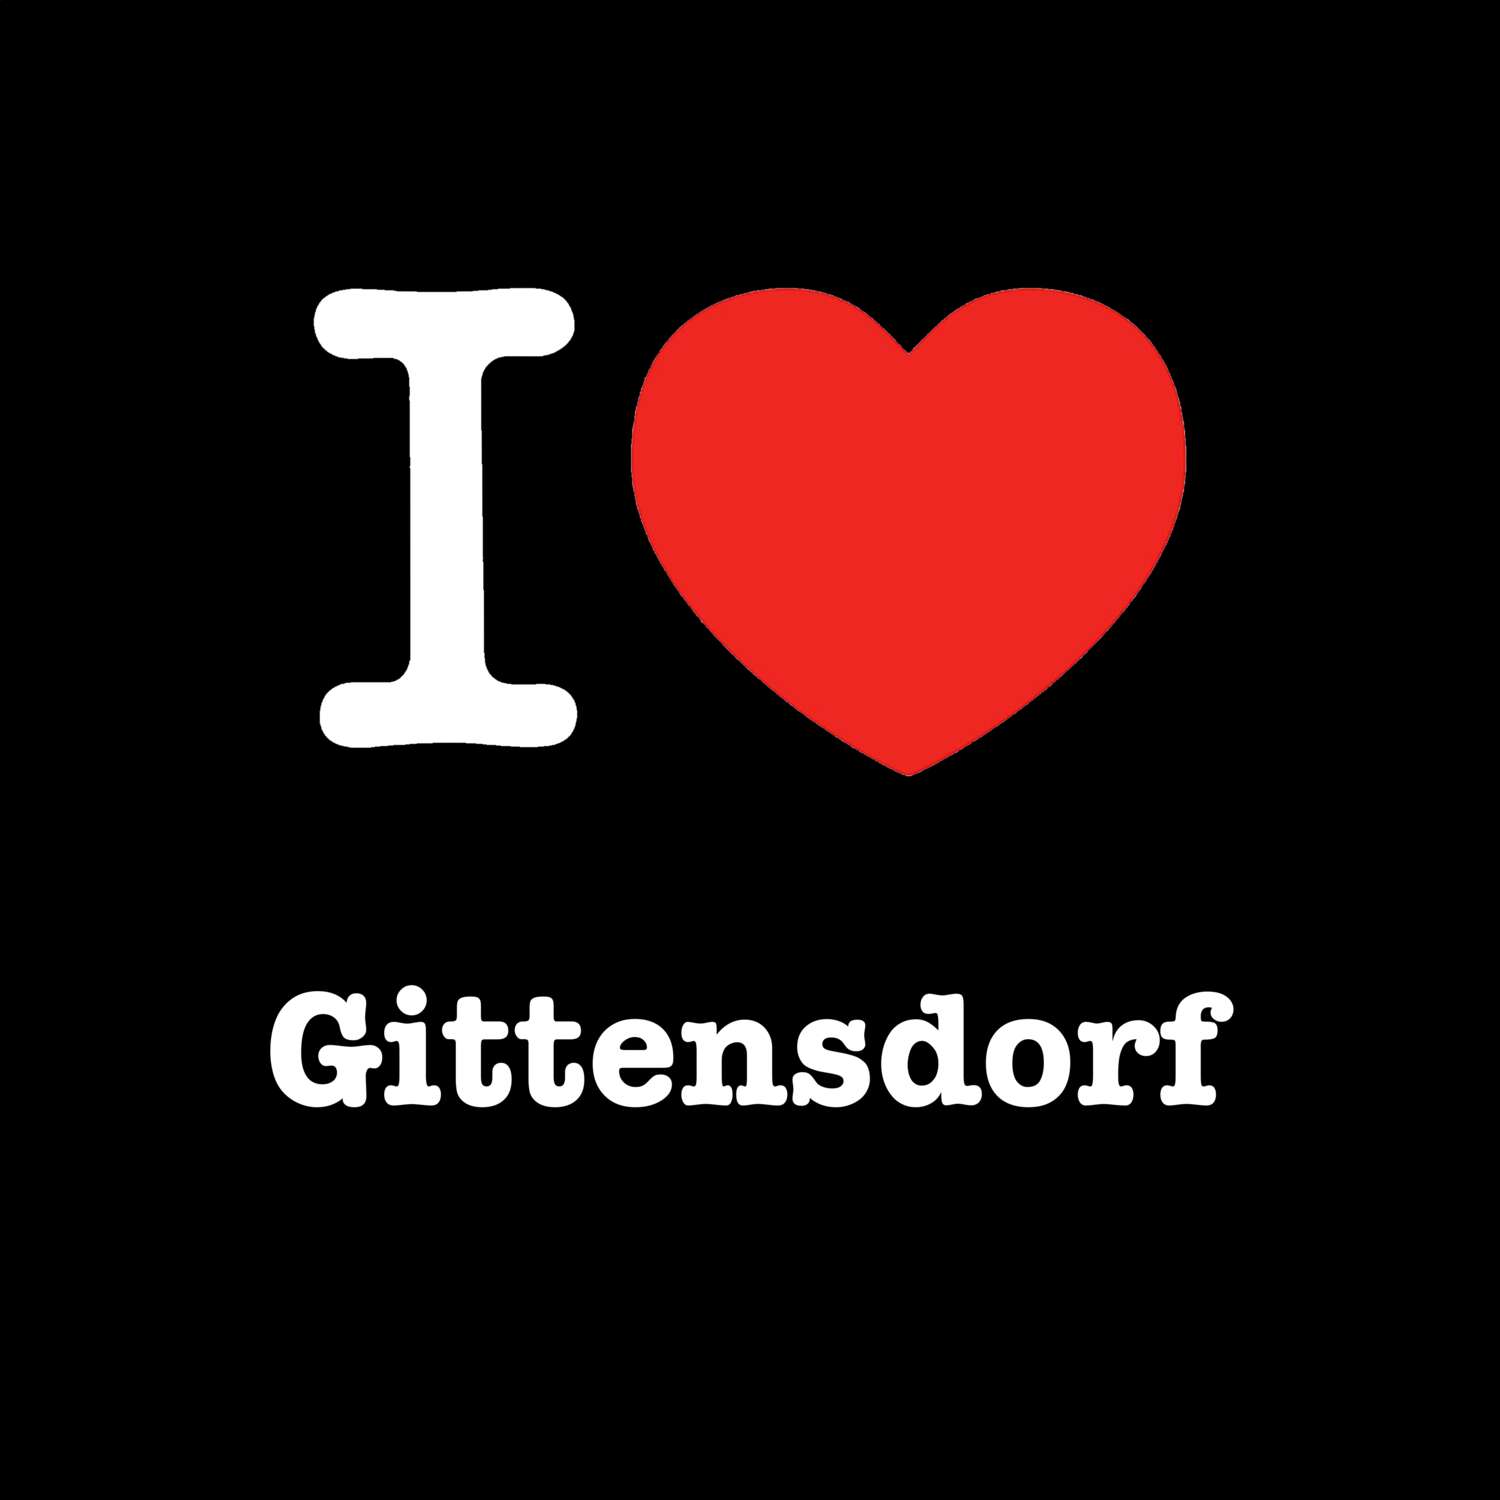 Gittensdorf T-Shirt »I love«